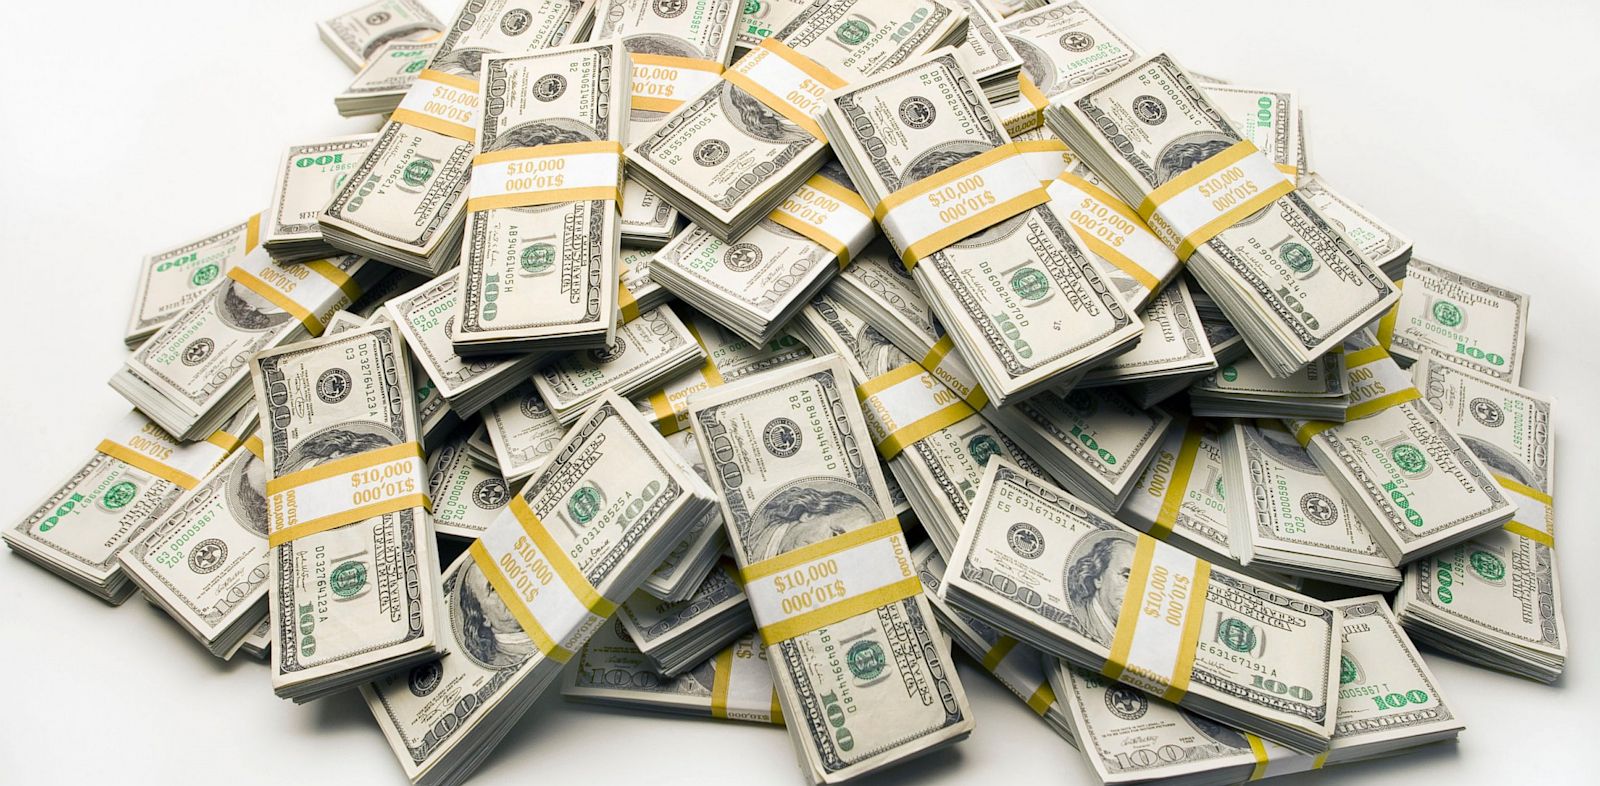 GTY_stock_cash_pile_money_dollar_bills-t